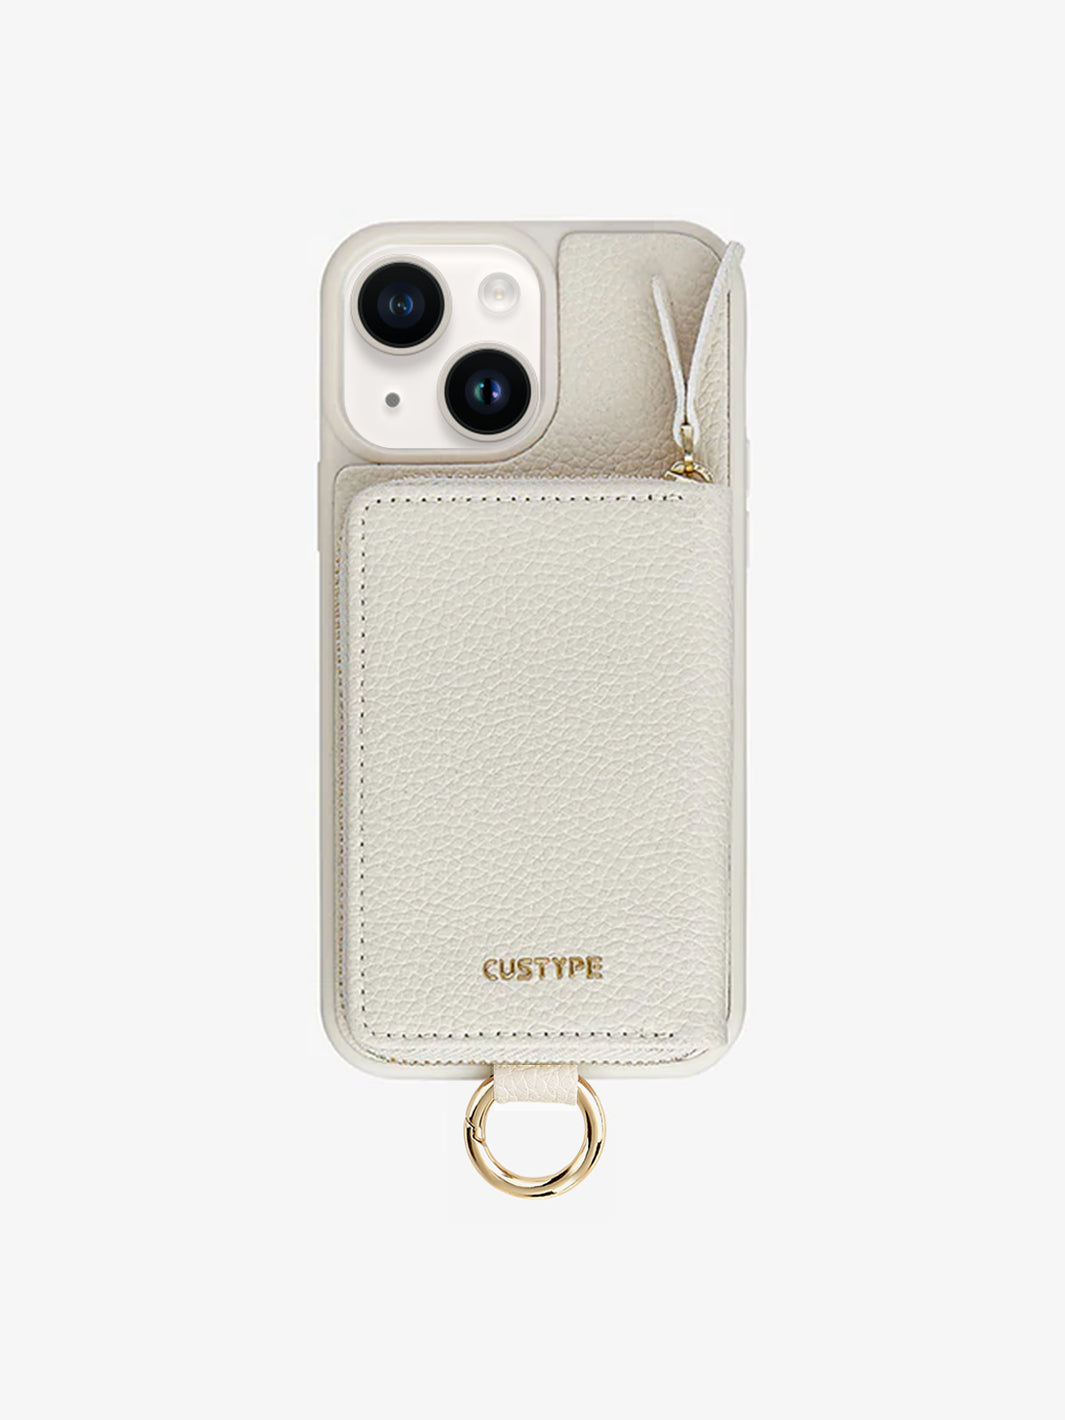 Shop the CrossMate Lychee Phone Case - Custype